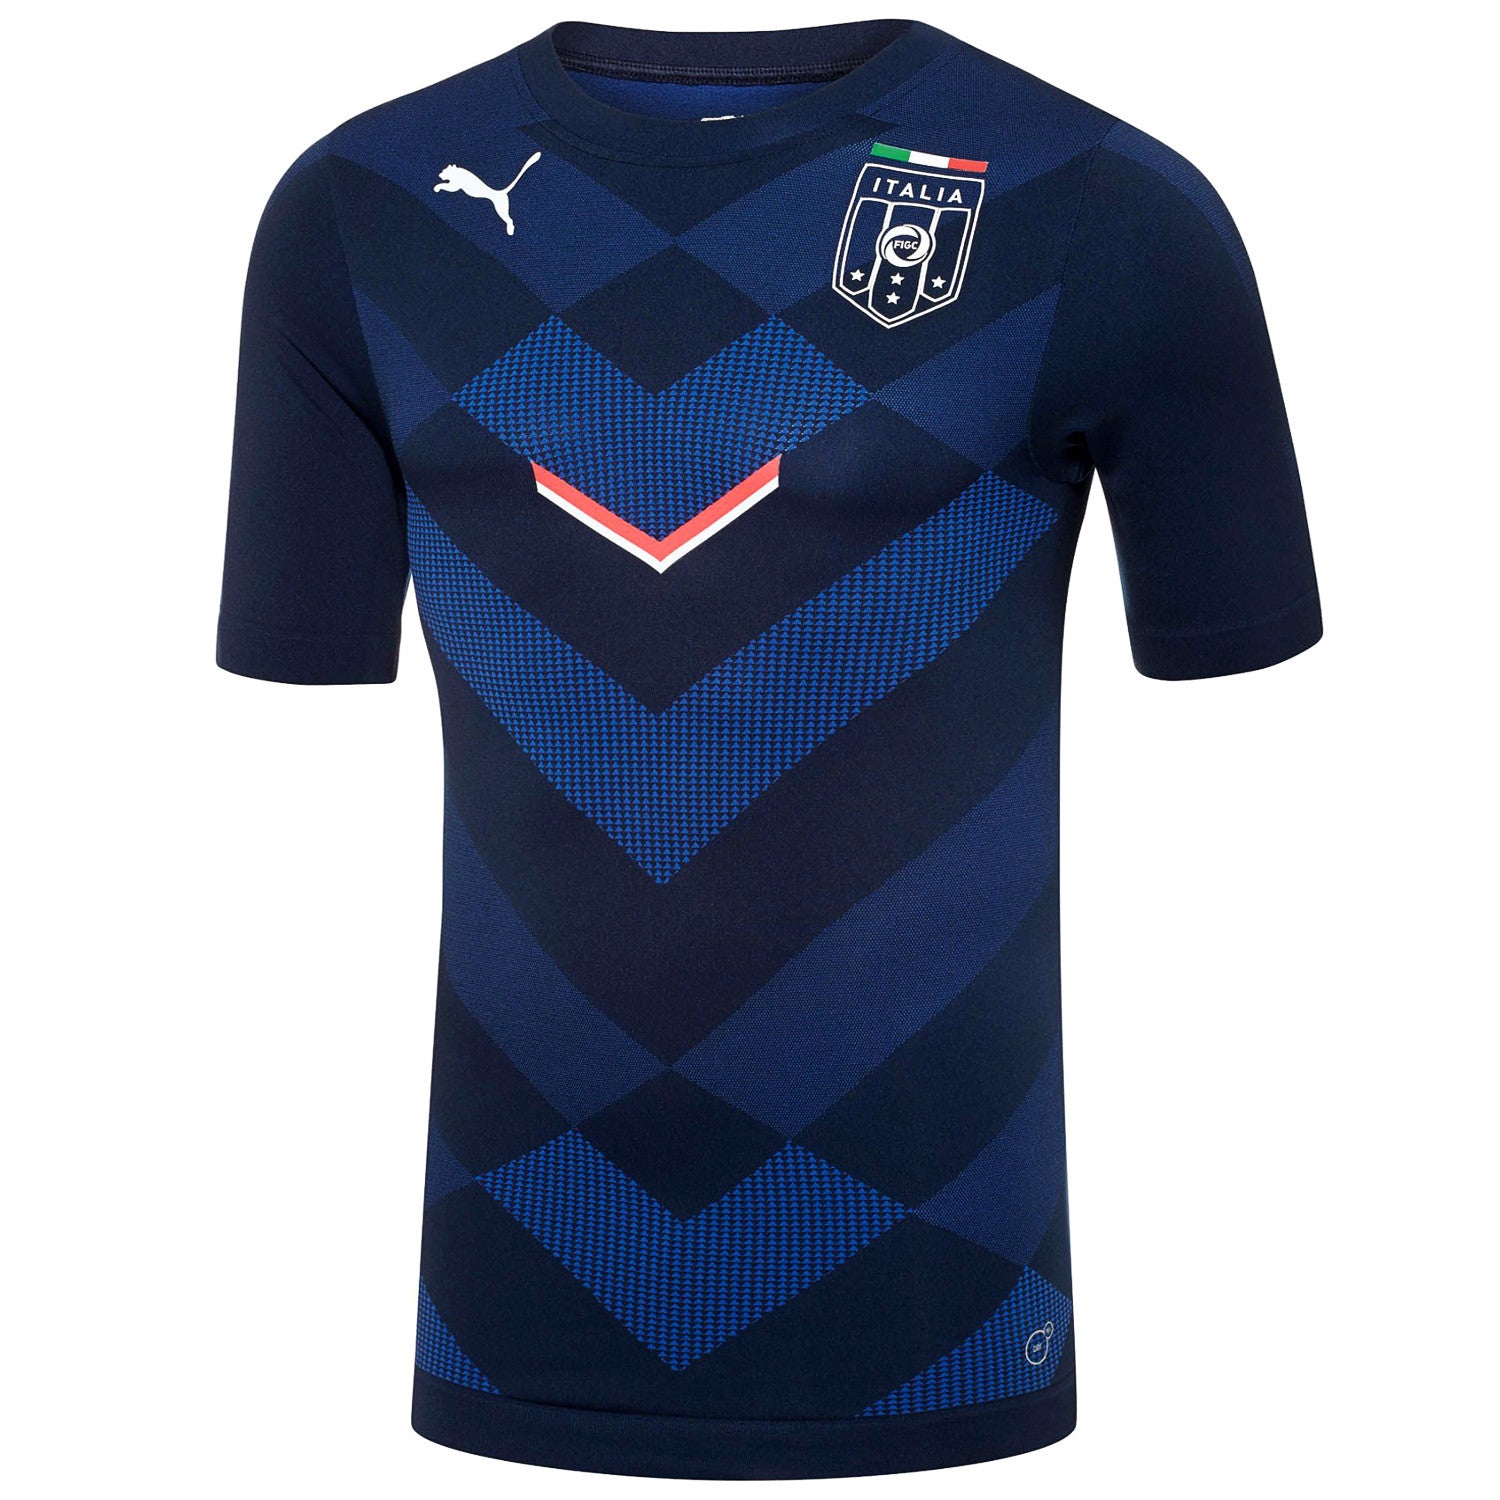 Team Jersey - Puma Shoplifestyle Power Blue/Pea T-Shirt Tee FIGC Fan Italia - Stadium